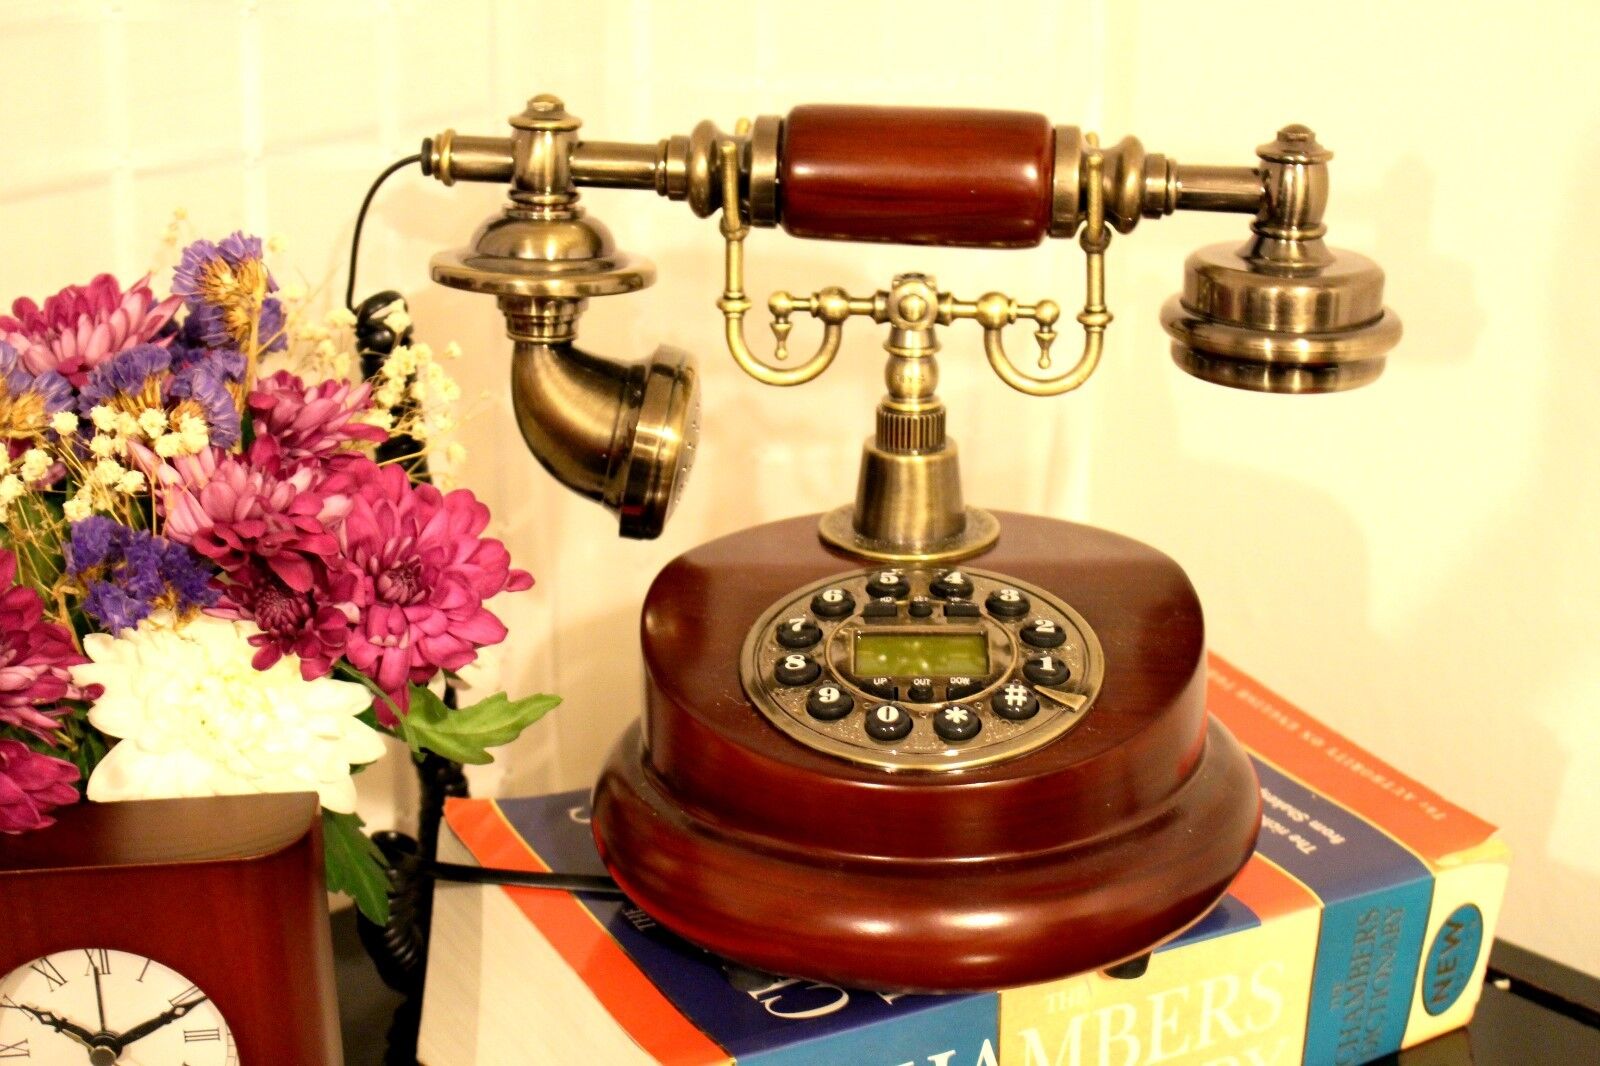 New Antique Button Dial Telephone Retro Vintage Wooden Home Decor Landline Cord